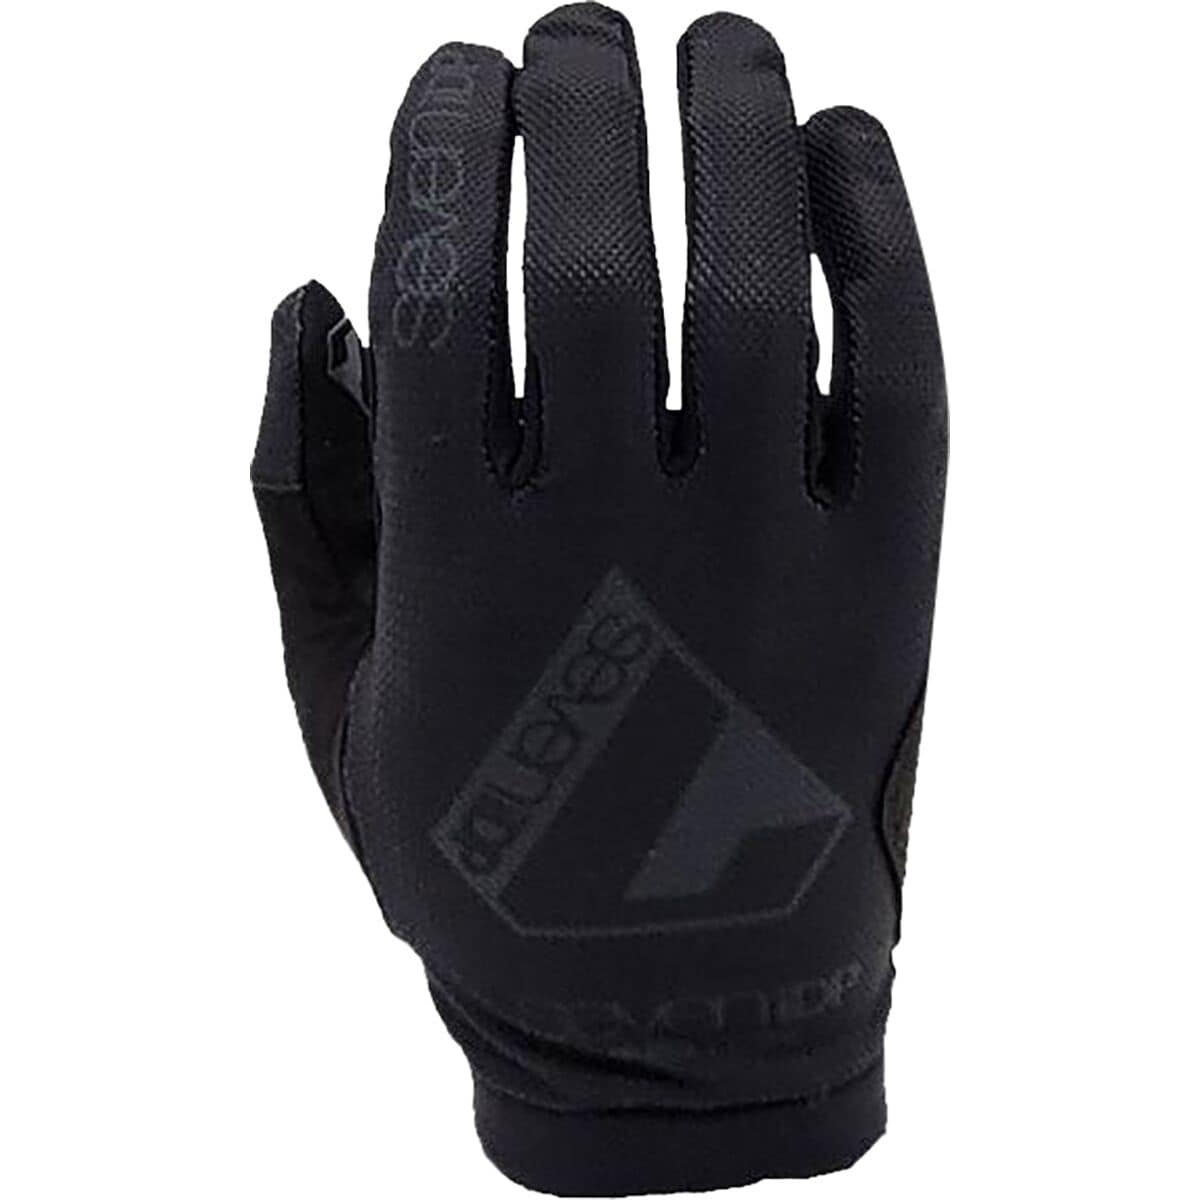 7 Protection Transition Glove - Men's Black, M